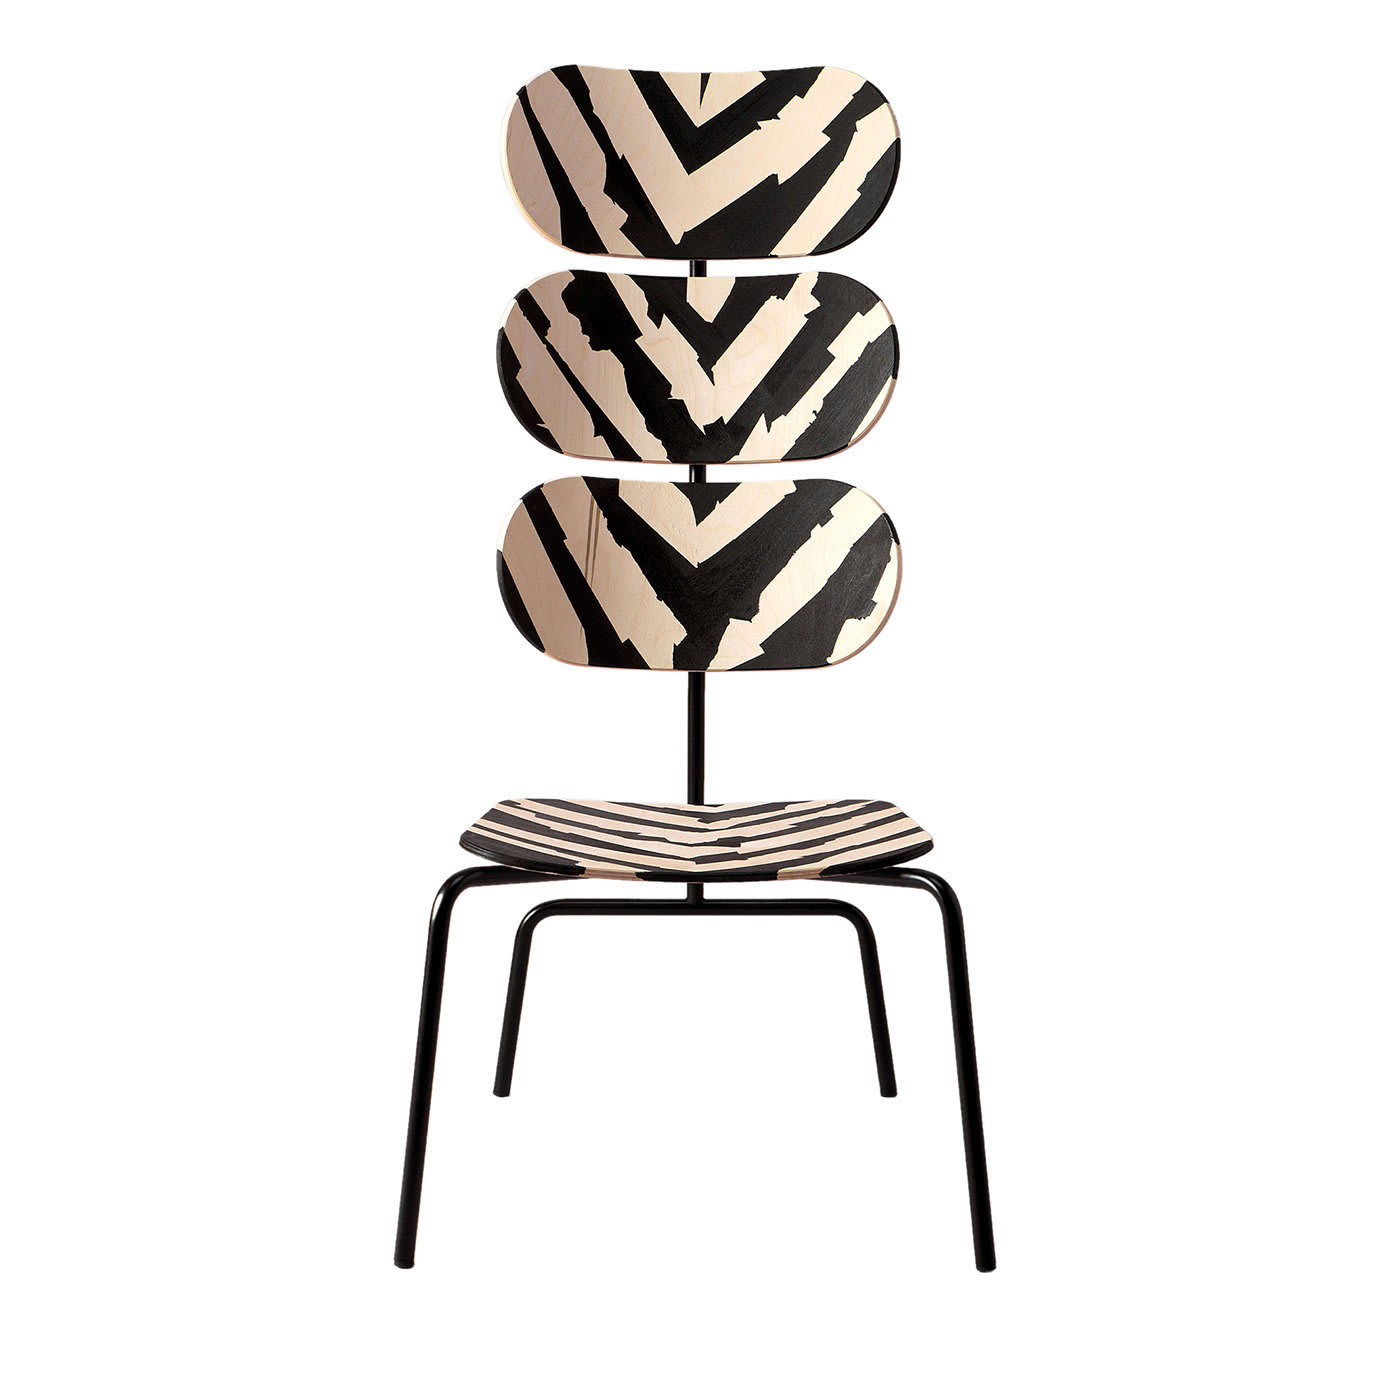 Lombrello Mackintosh Chair by Andrea Forapani and Tania Grace Knuckey - Lombrello